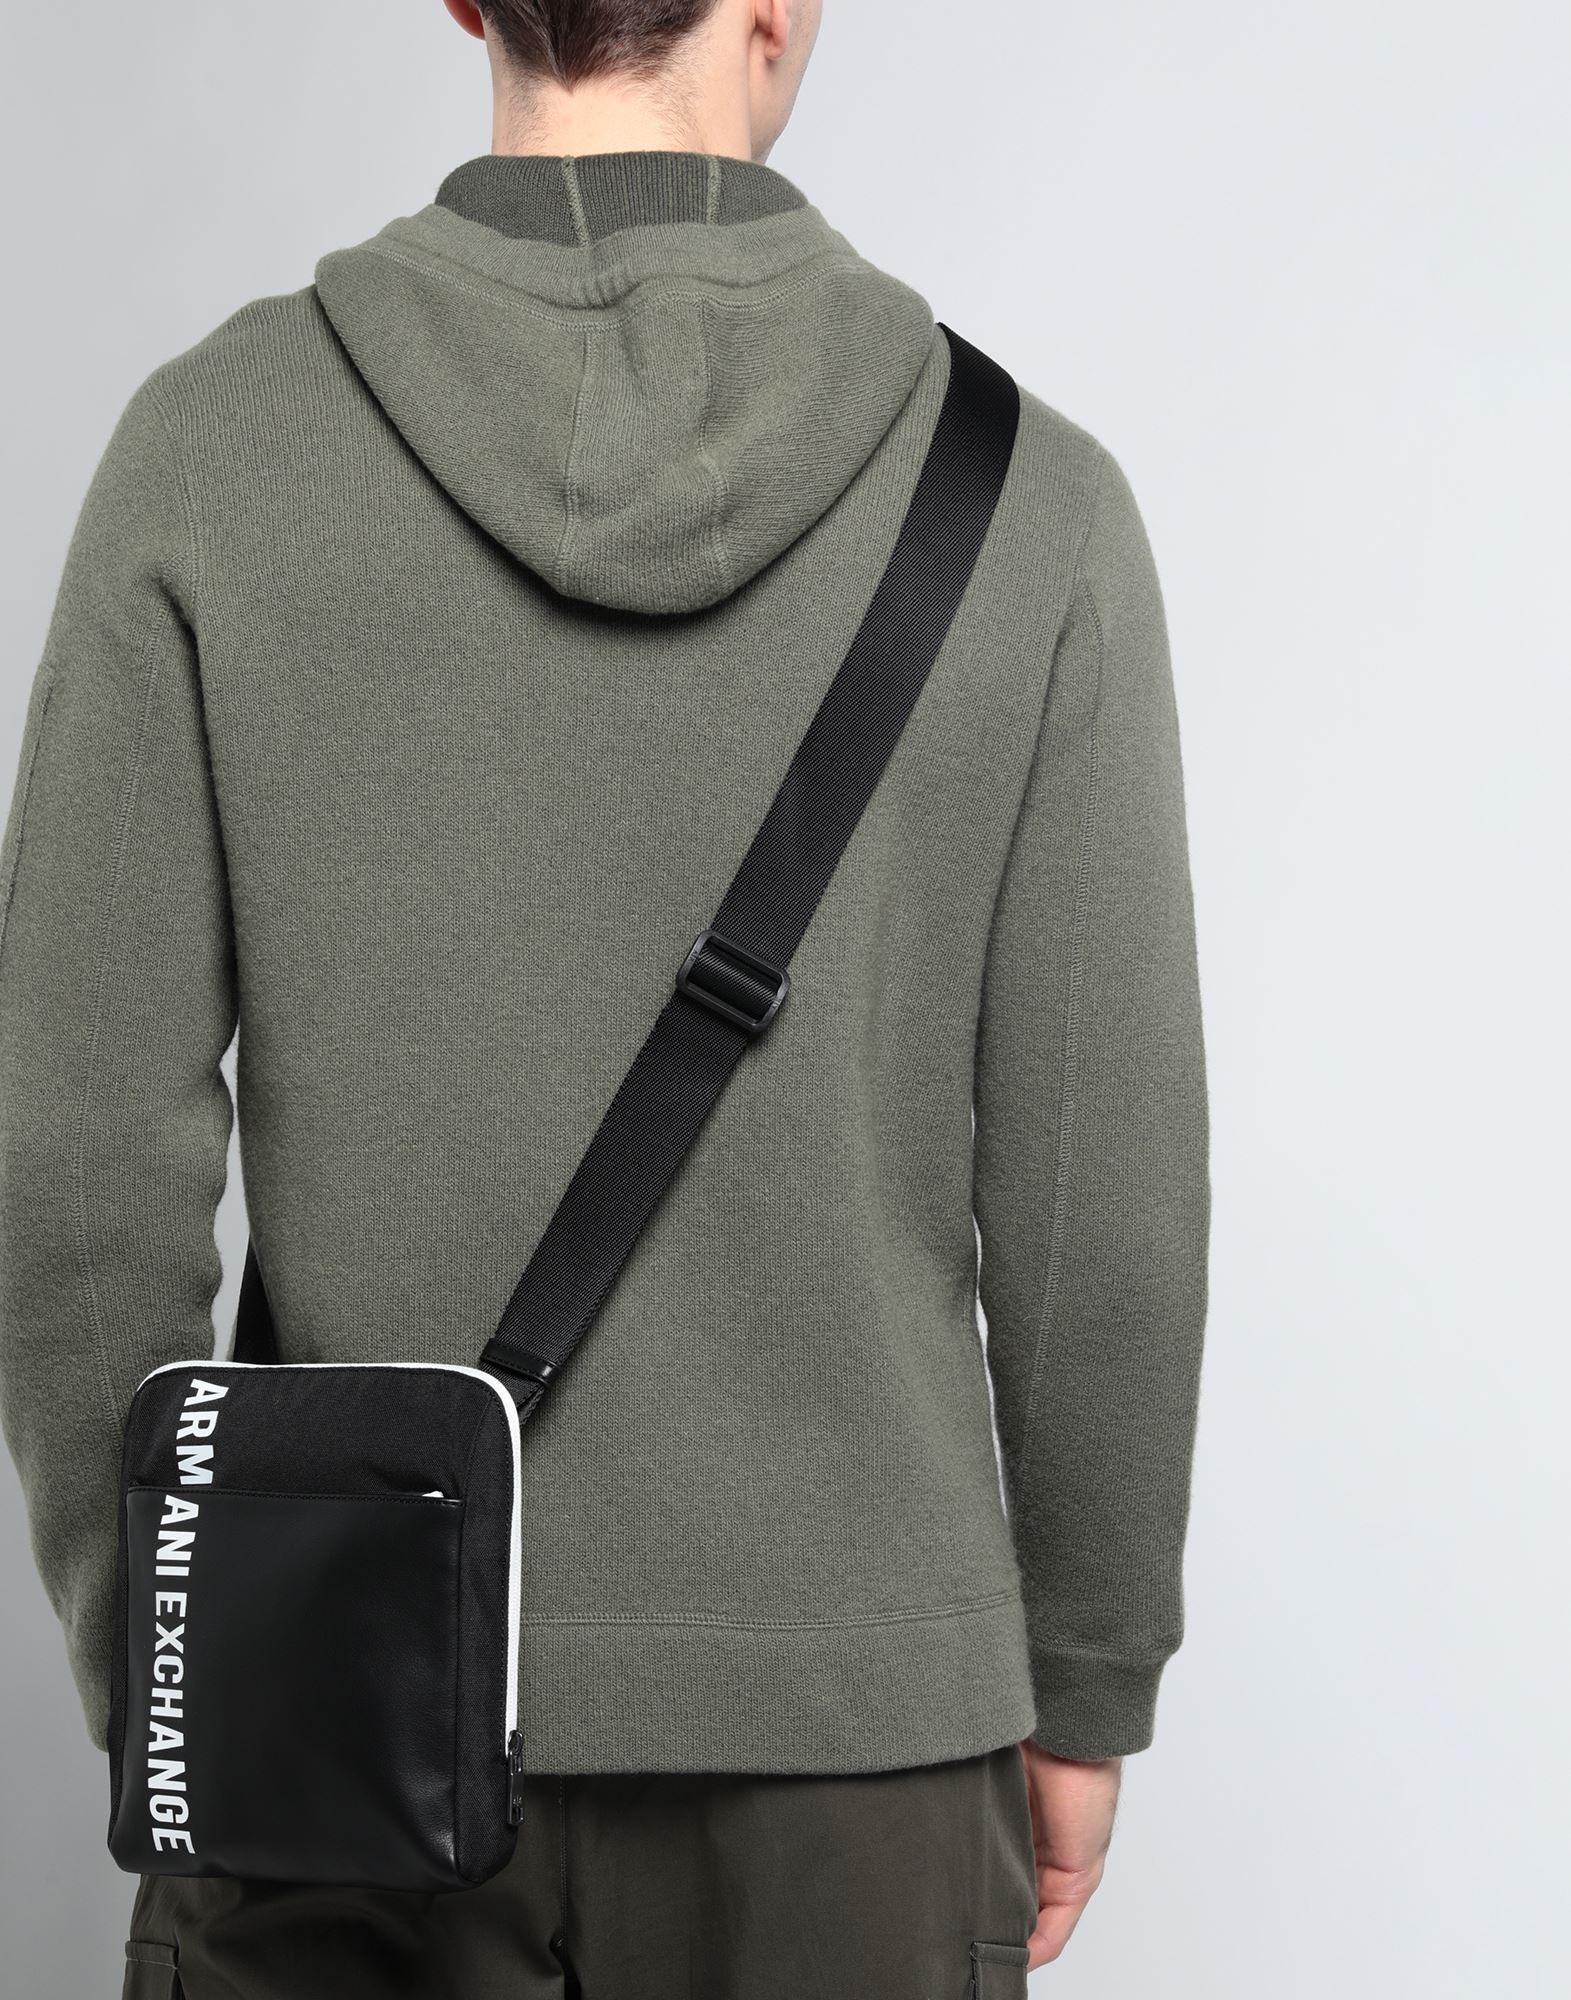 Armani Exchange Cross-body Bag in Black for Men | Lyst